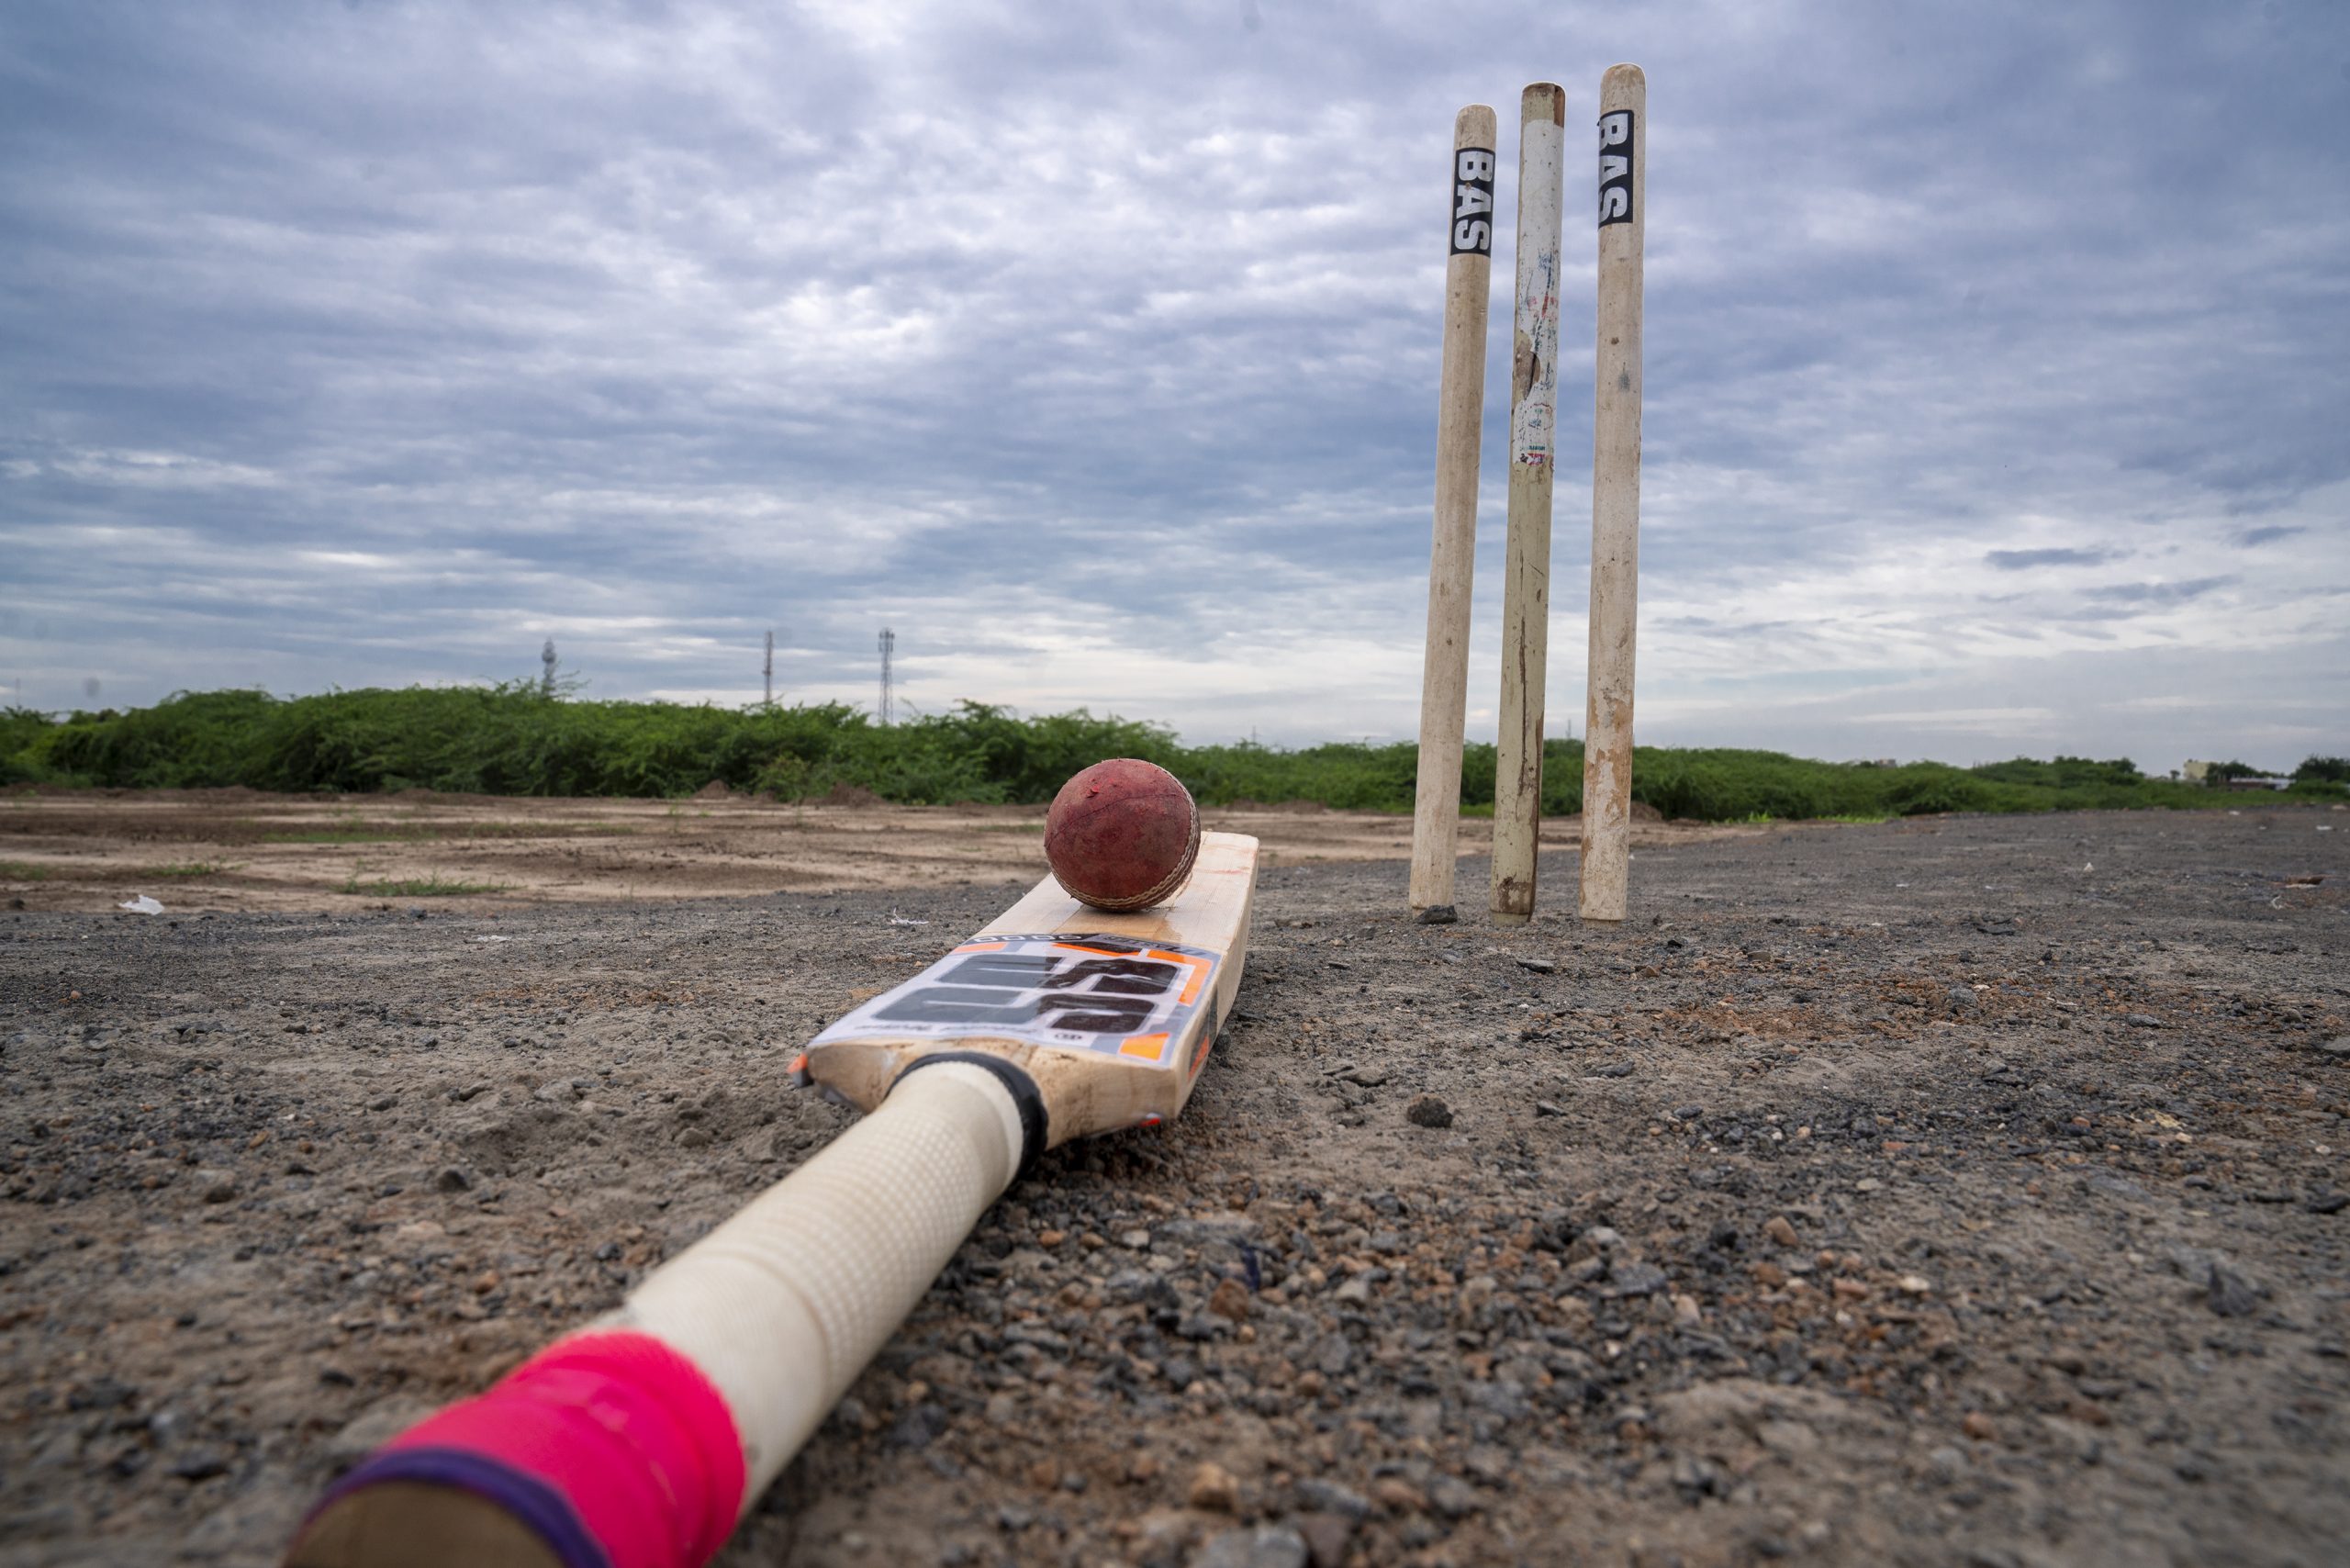 Cricket sports equipment